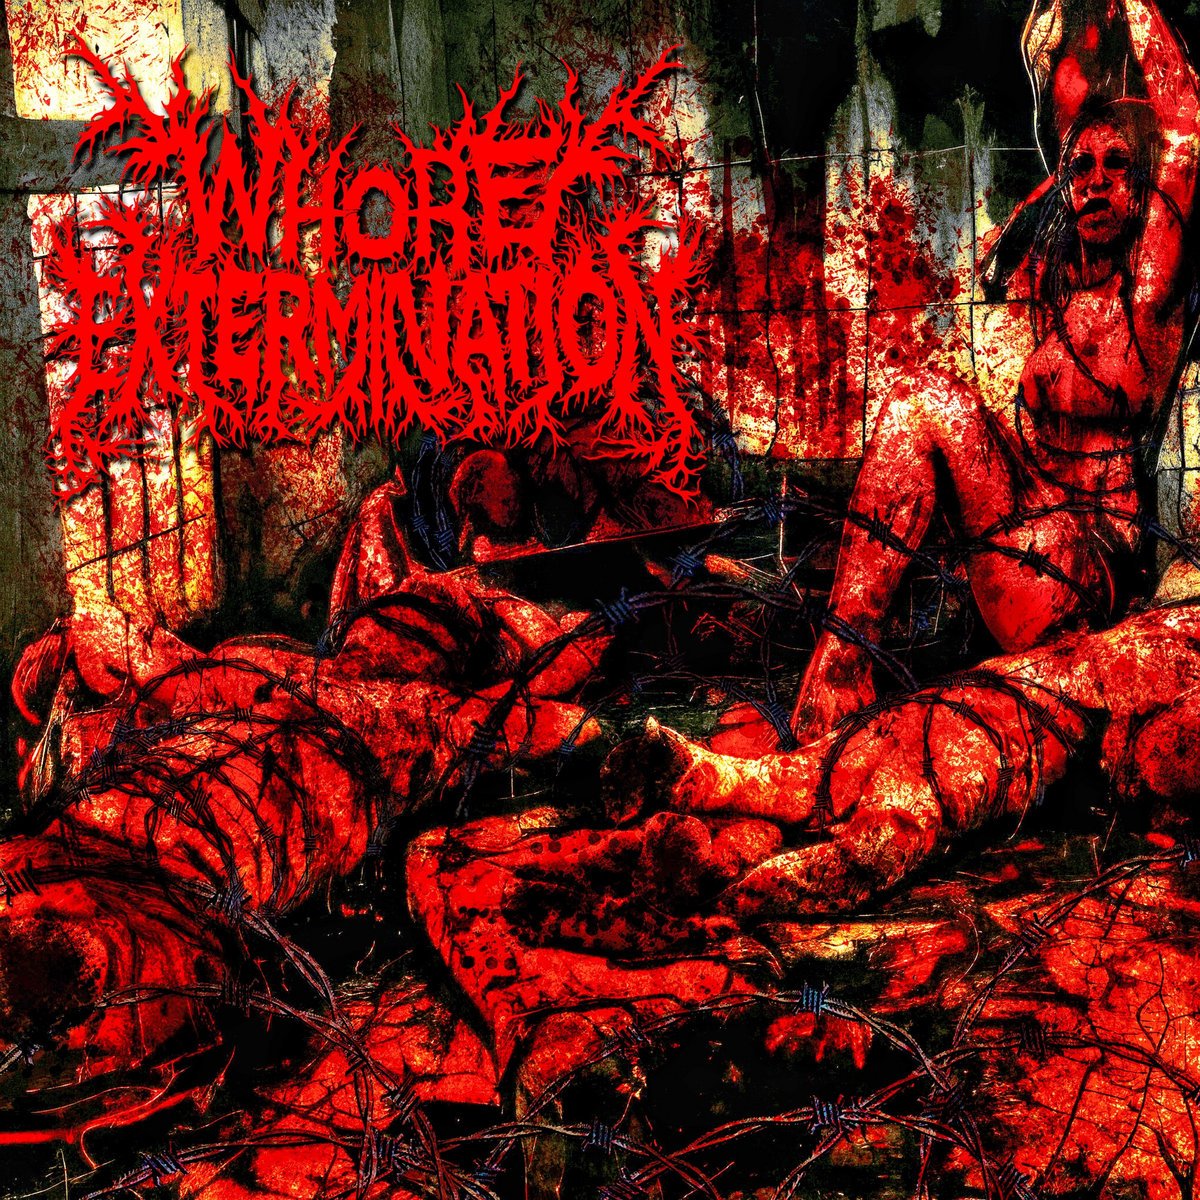 Whore Extermination

ST

slamming #deathmetal #brutaldeathmetal